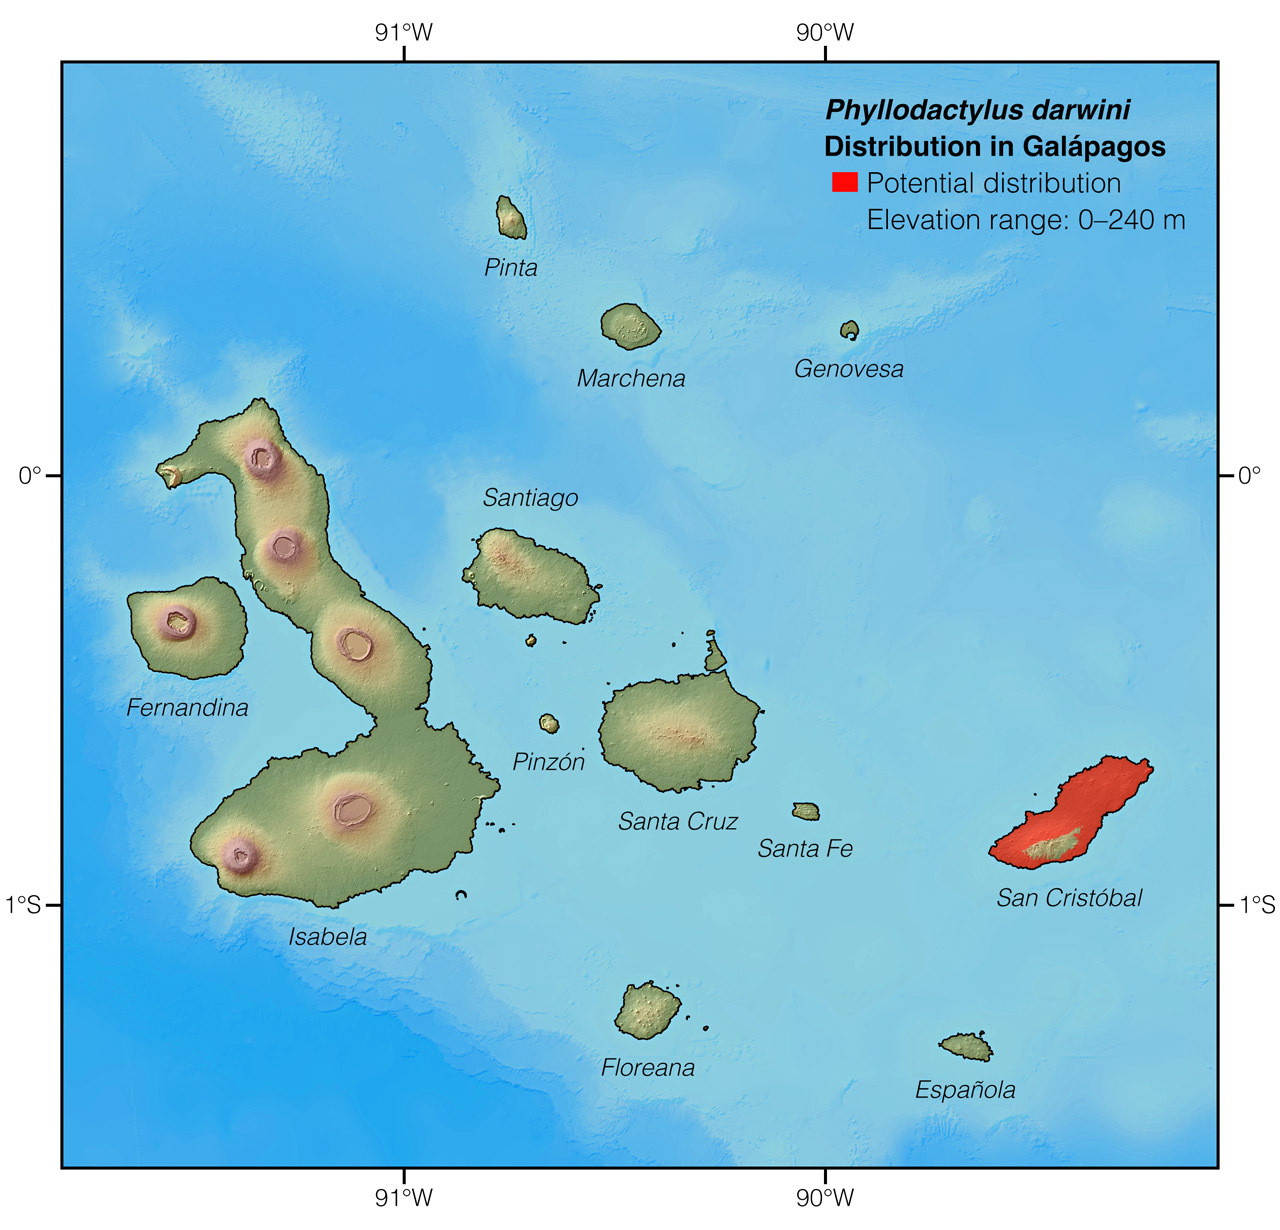 Distribution of Phyllodactylus darwini in Galápagos